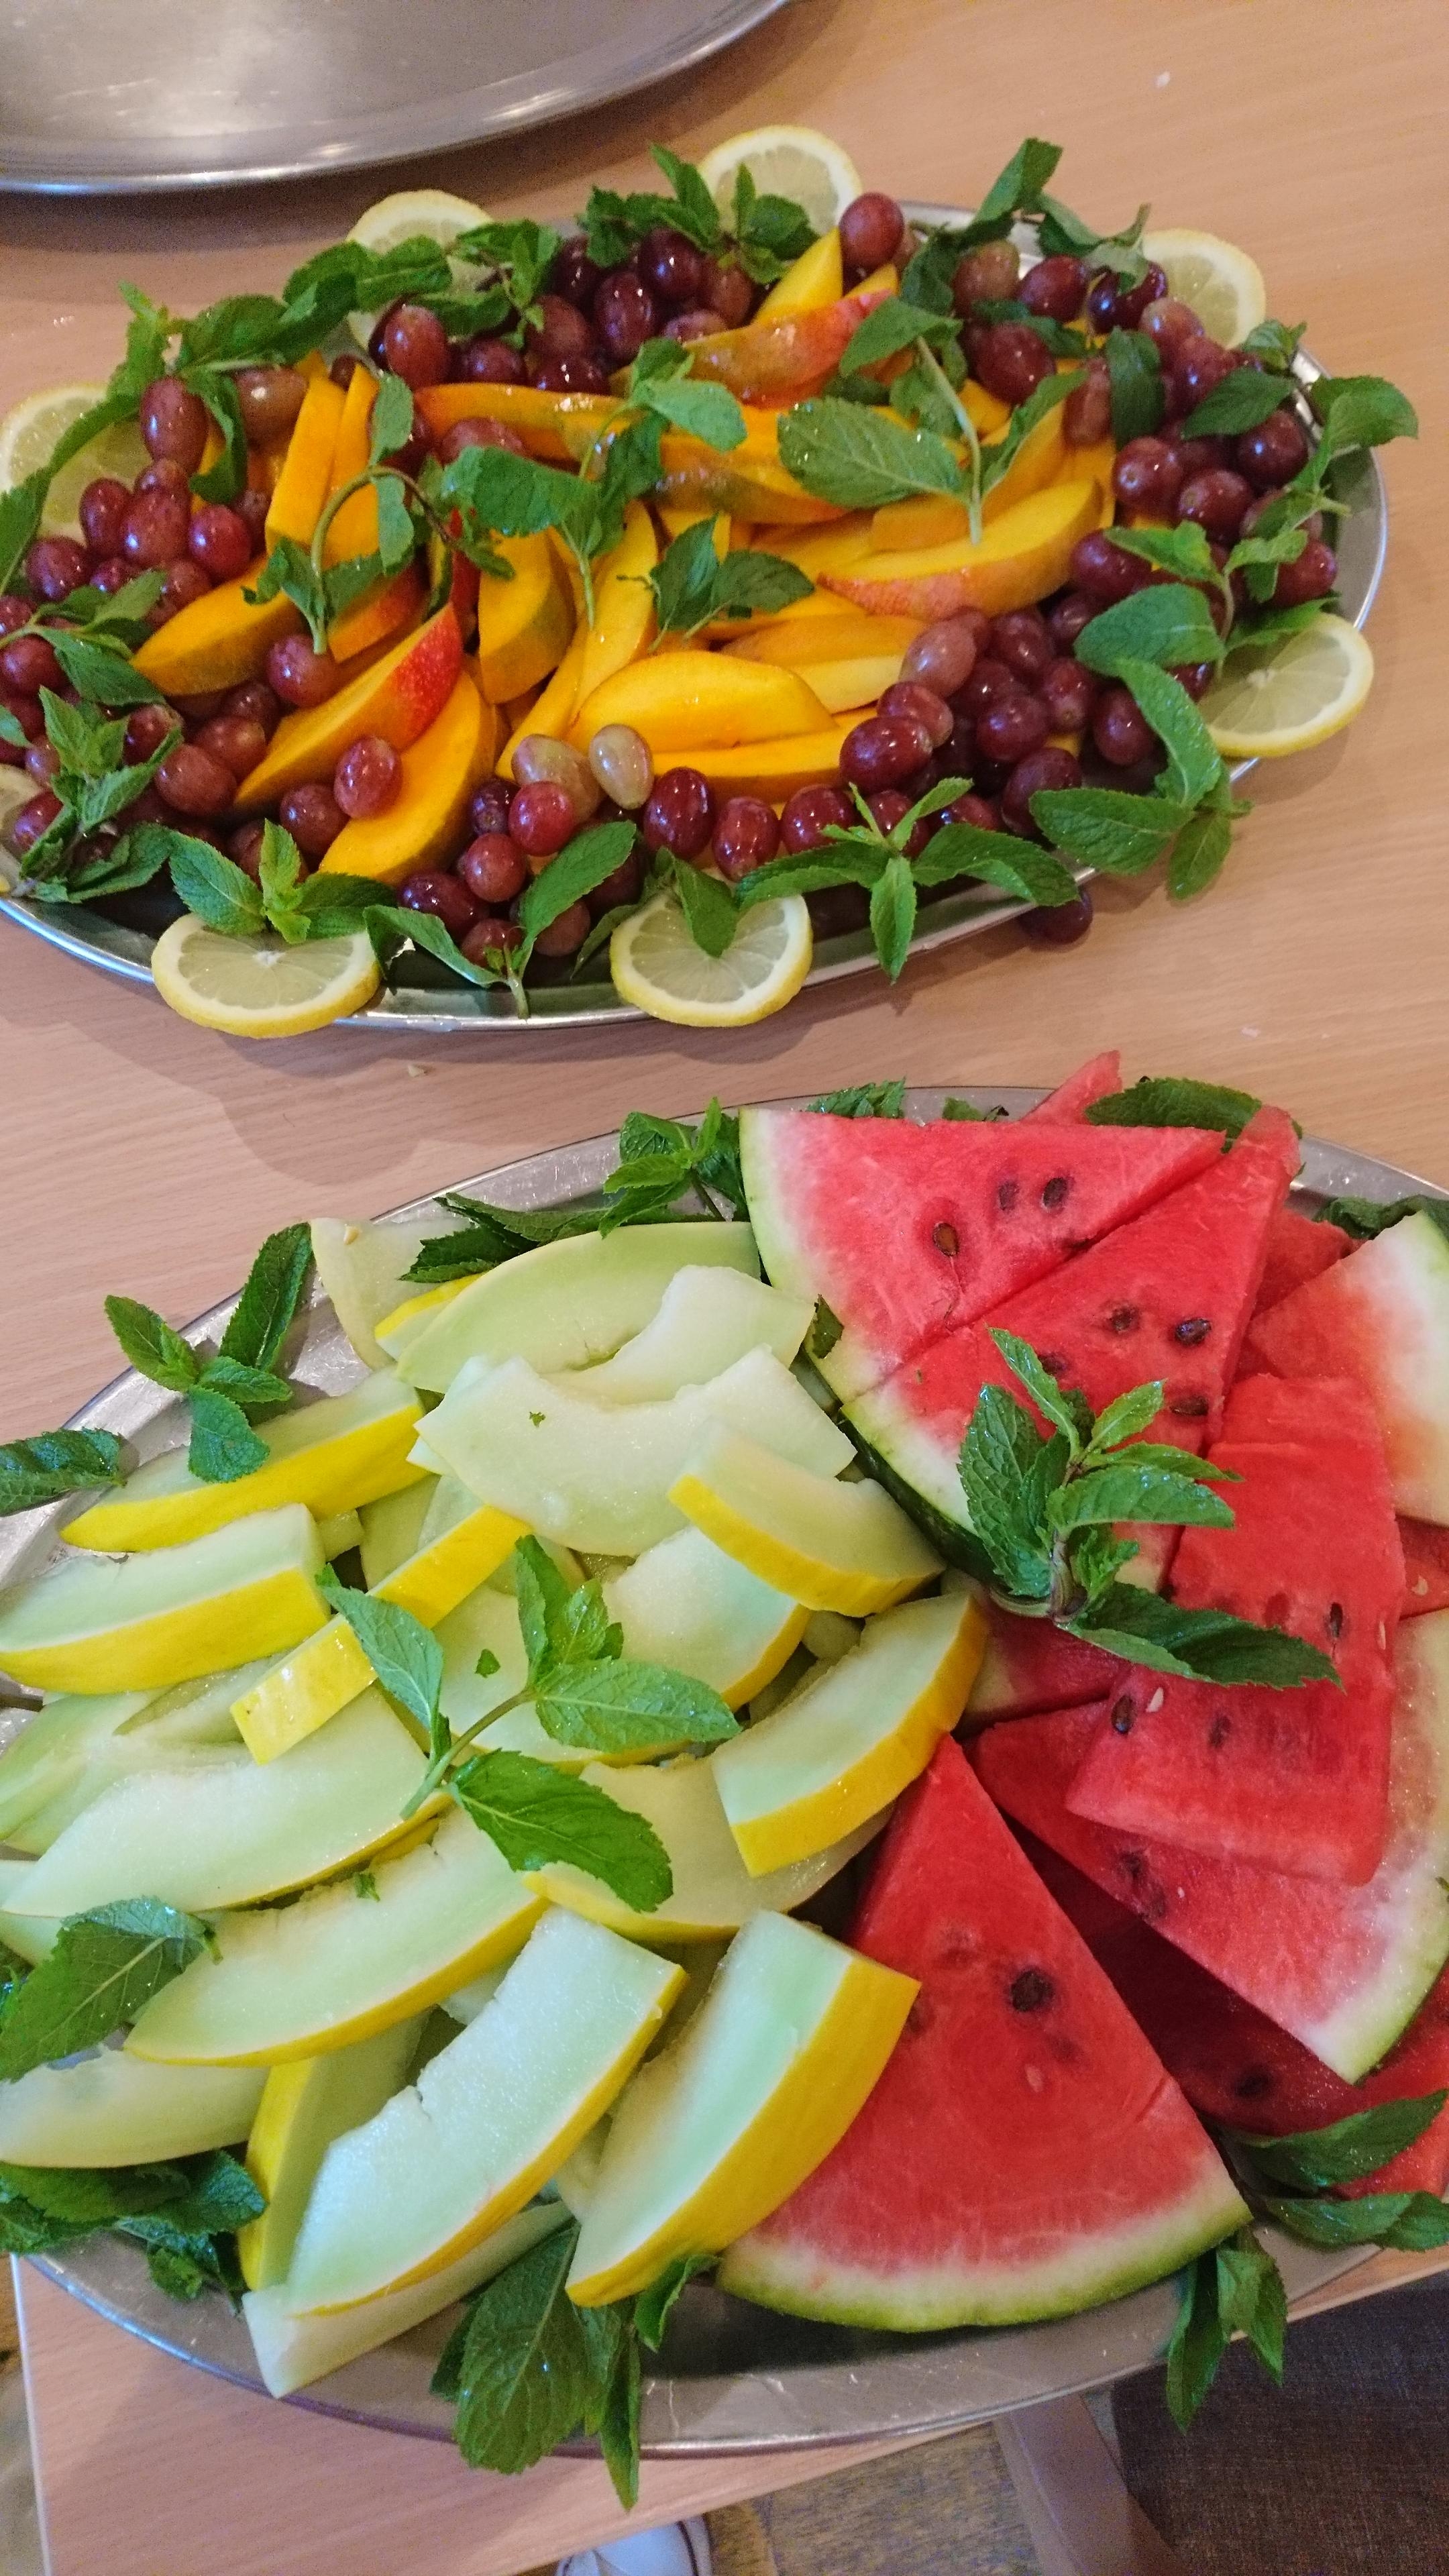 🍉 Melons & Mango last night at a beautiful Integration project

#EinTellerHeimat #food #melone